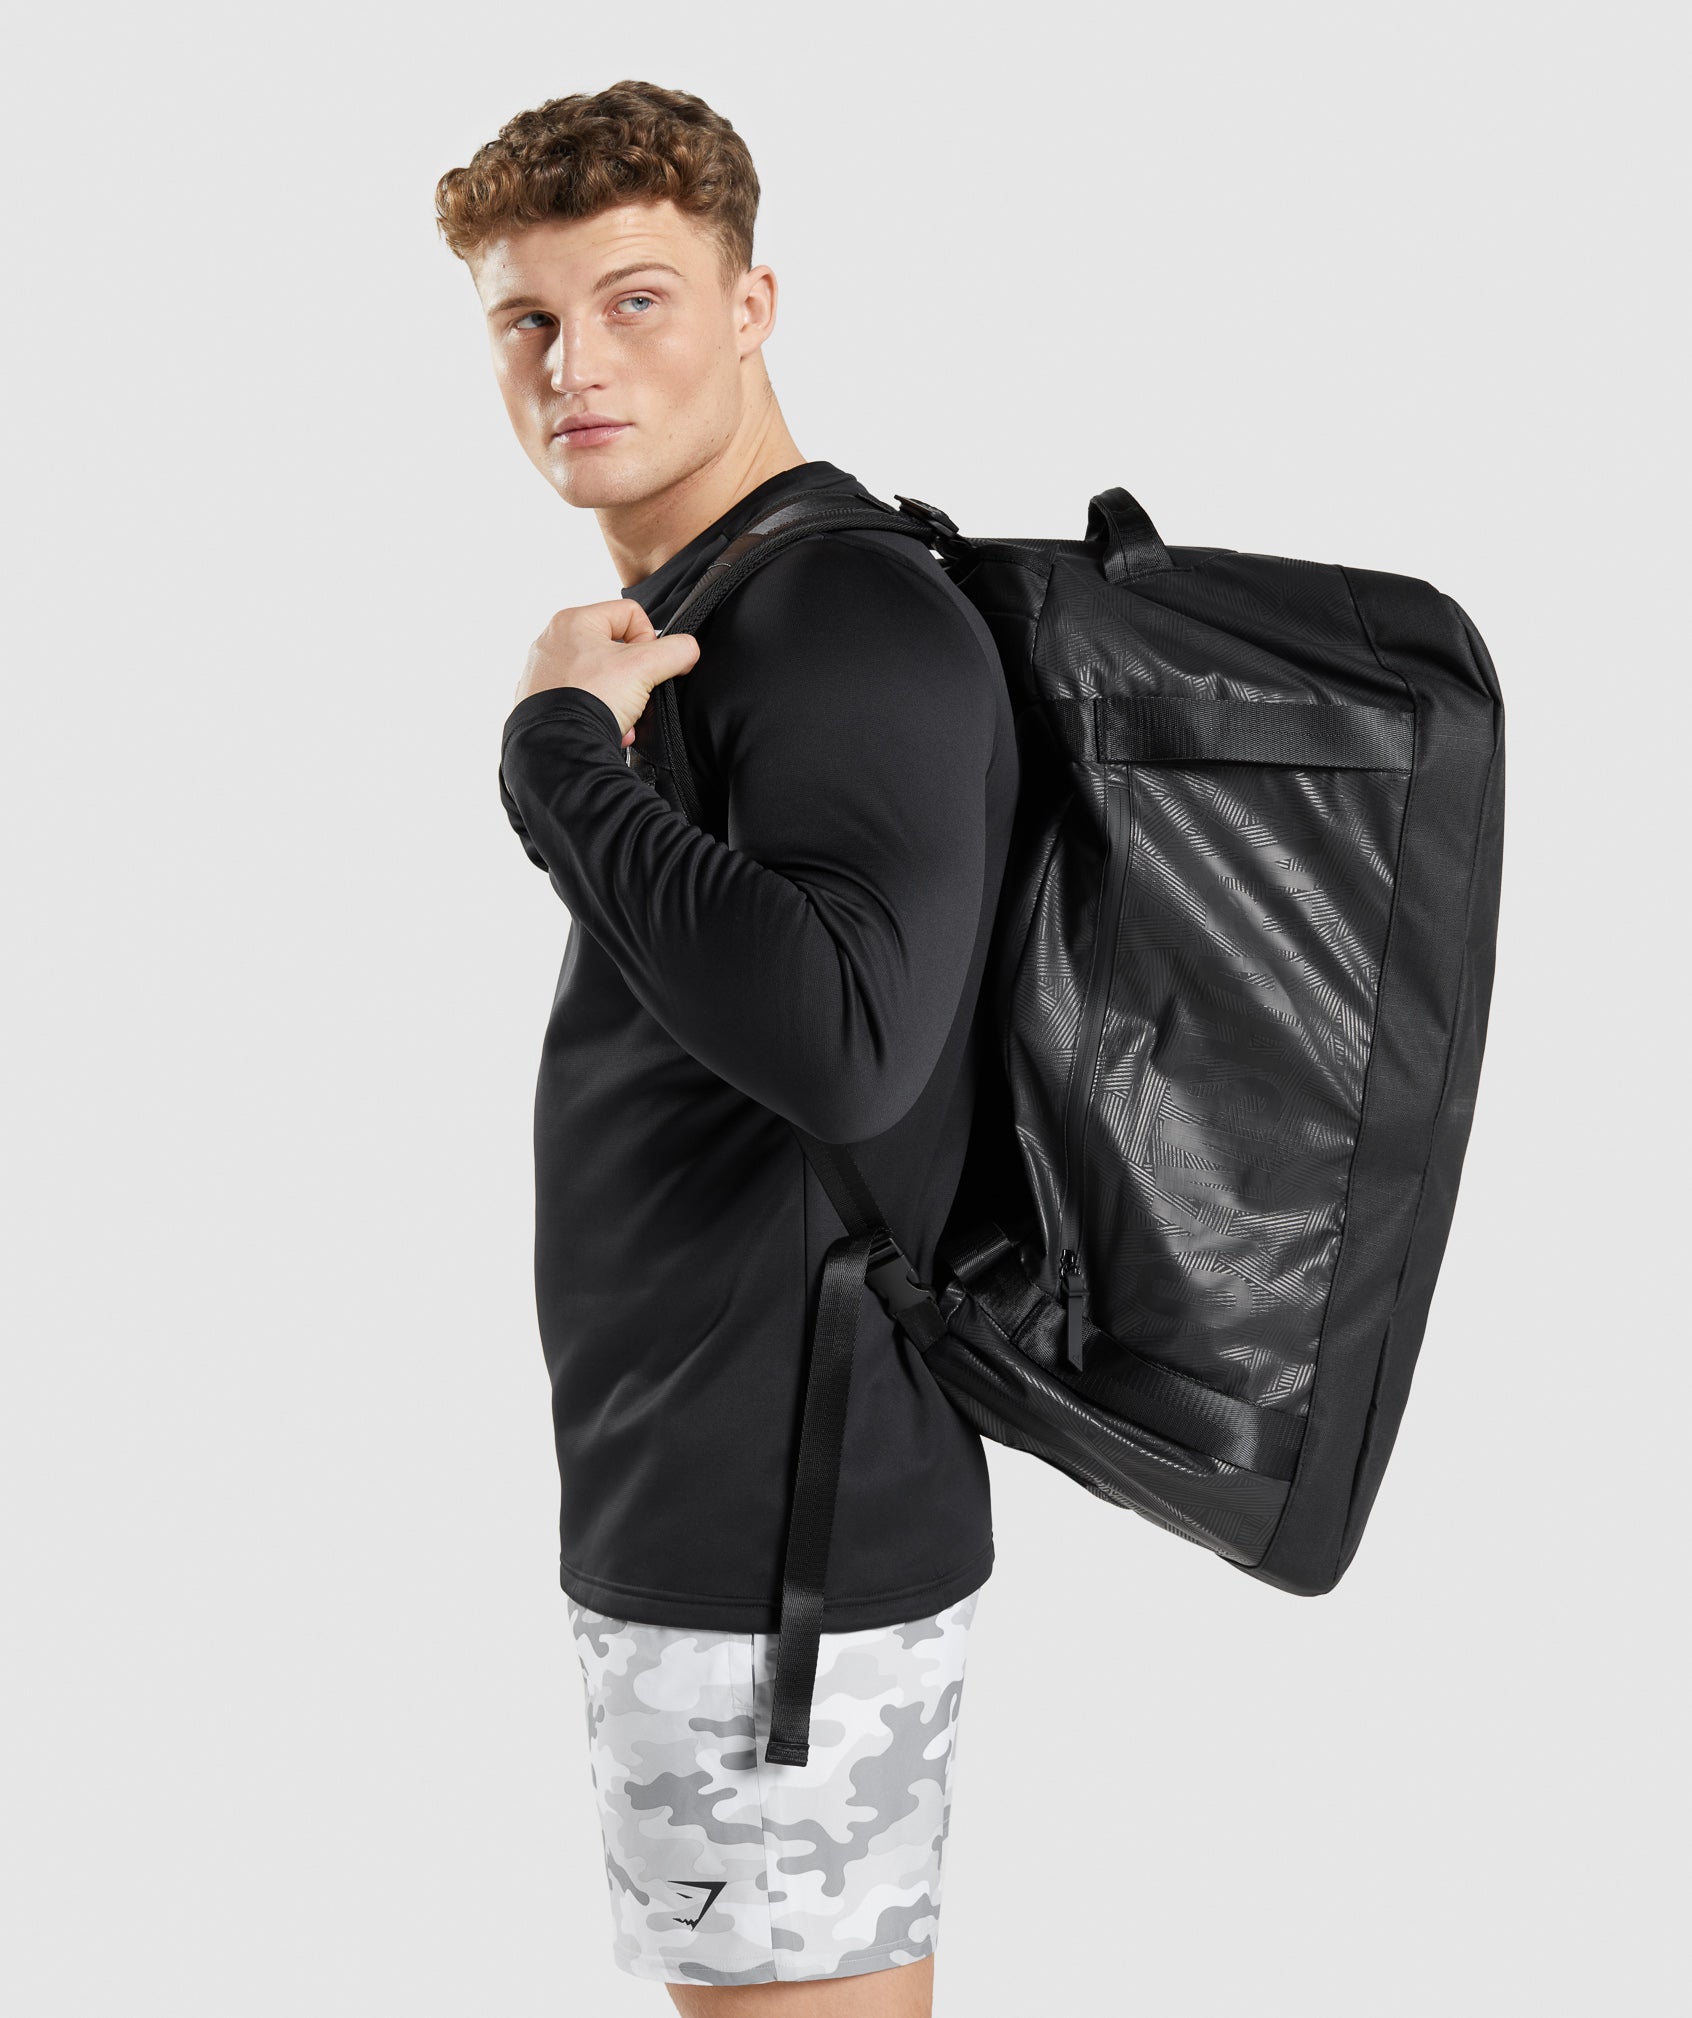 X-Series Duffle Bag